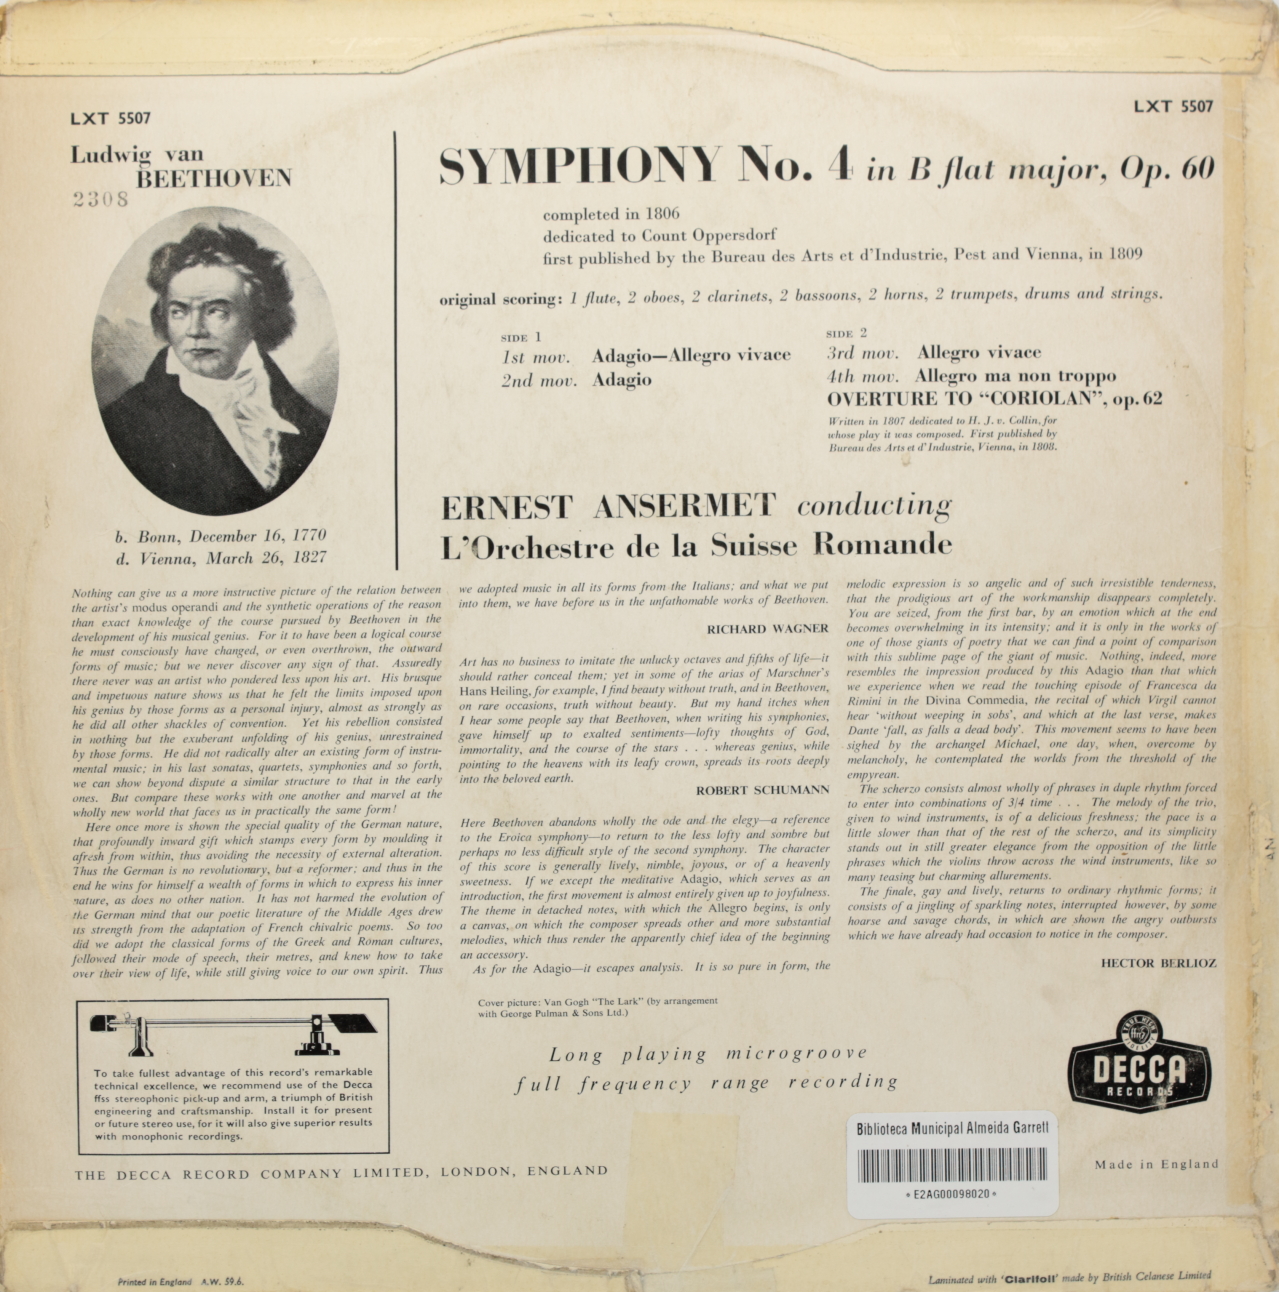 Beethoven: Symphonie Nº 4; Corolian Overture